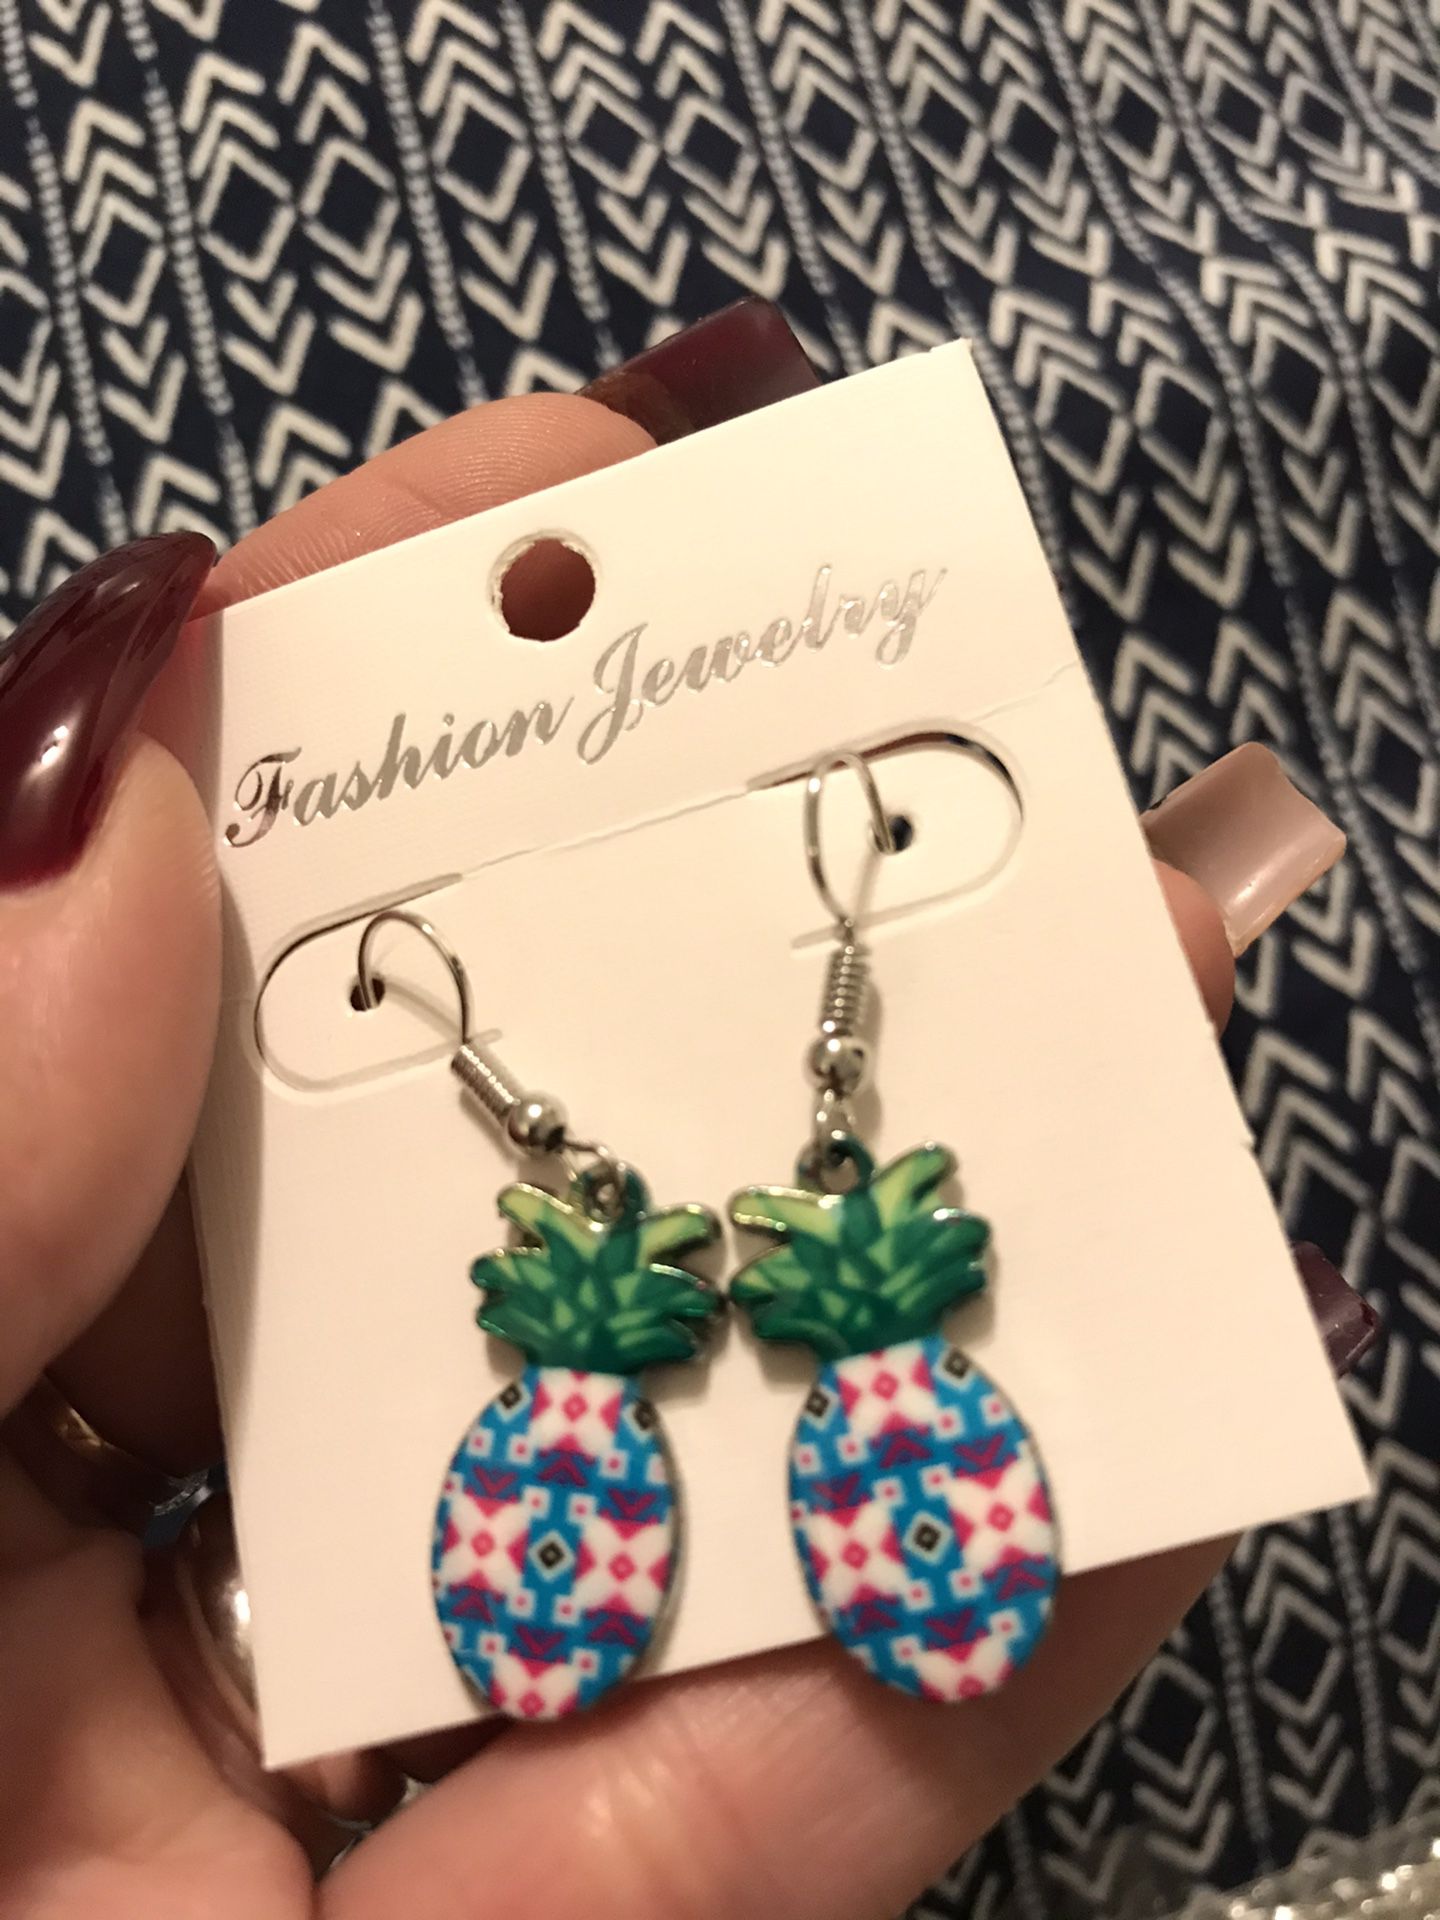 Pineapple earrings new $2